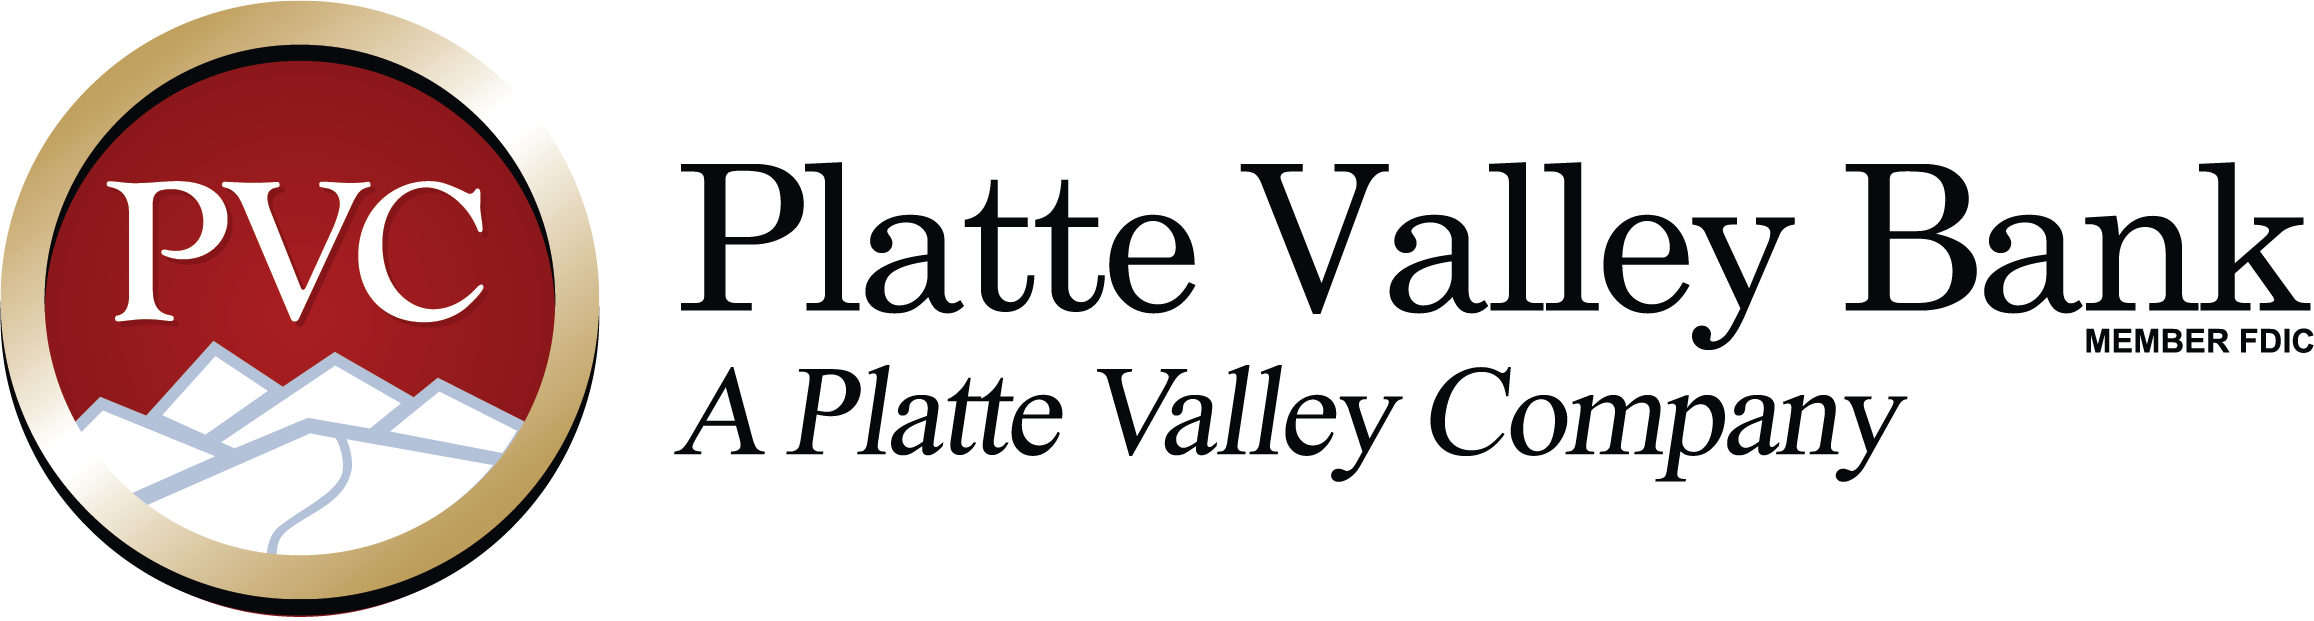 Platte Valley Bank logo